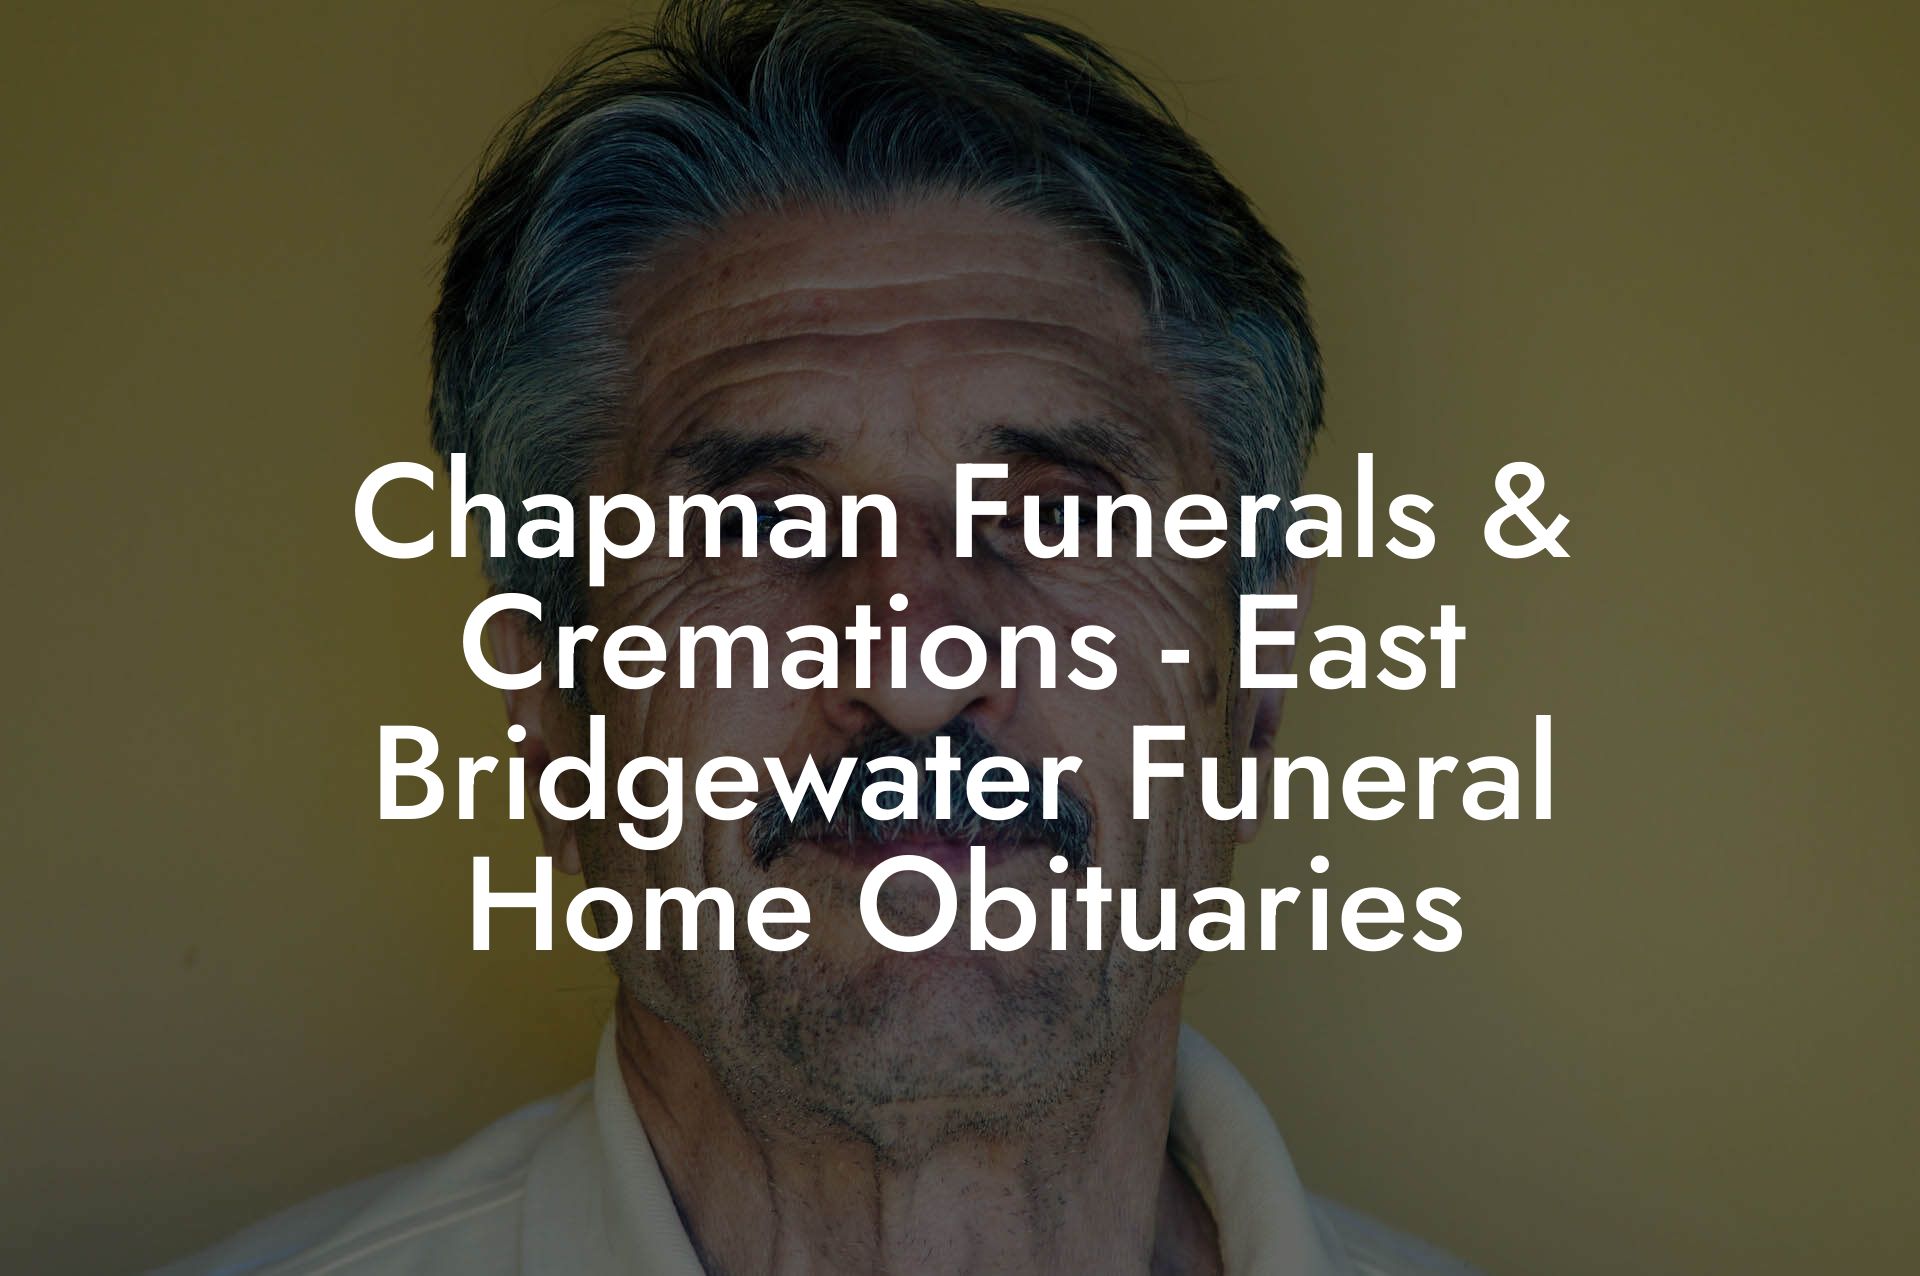 Chapman Funerals & Cremations - East Bridgewater Funeral Home Obituaries